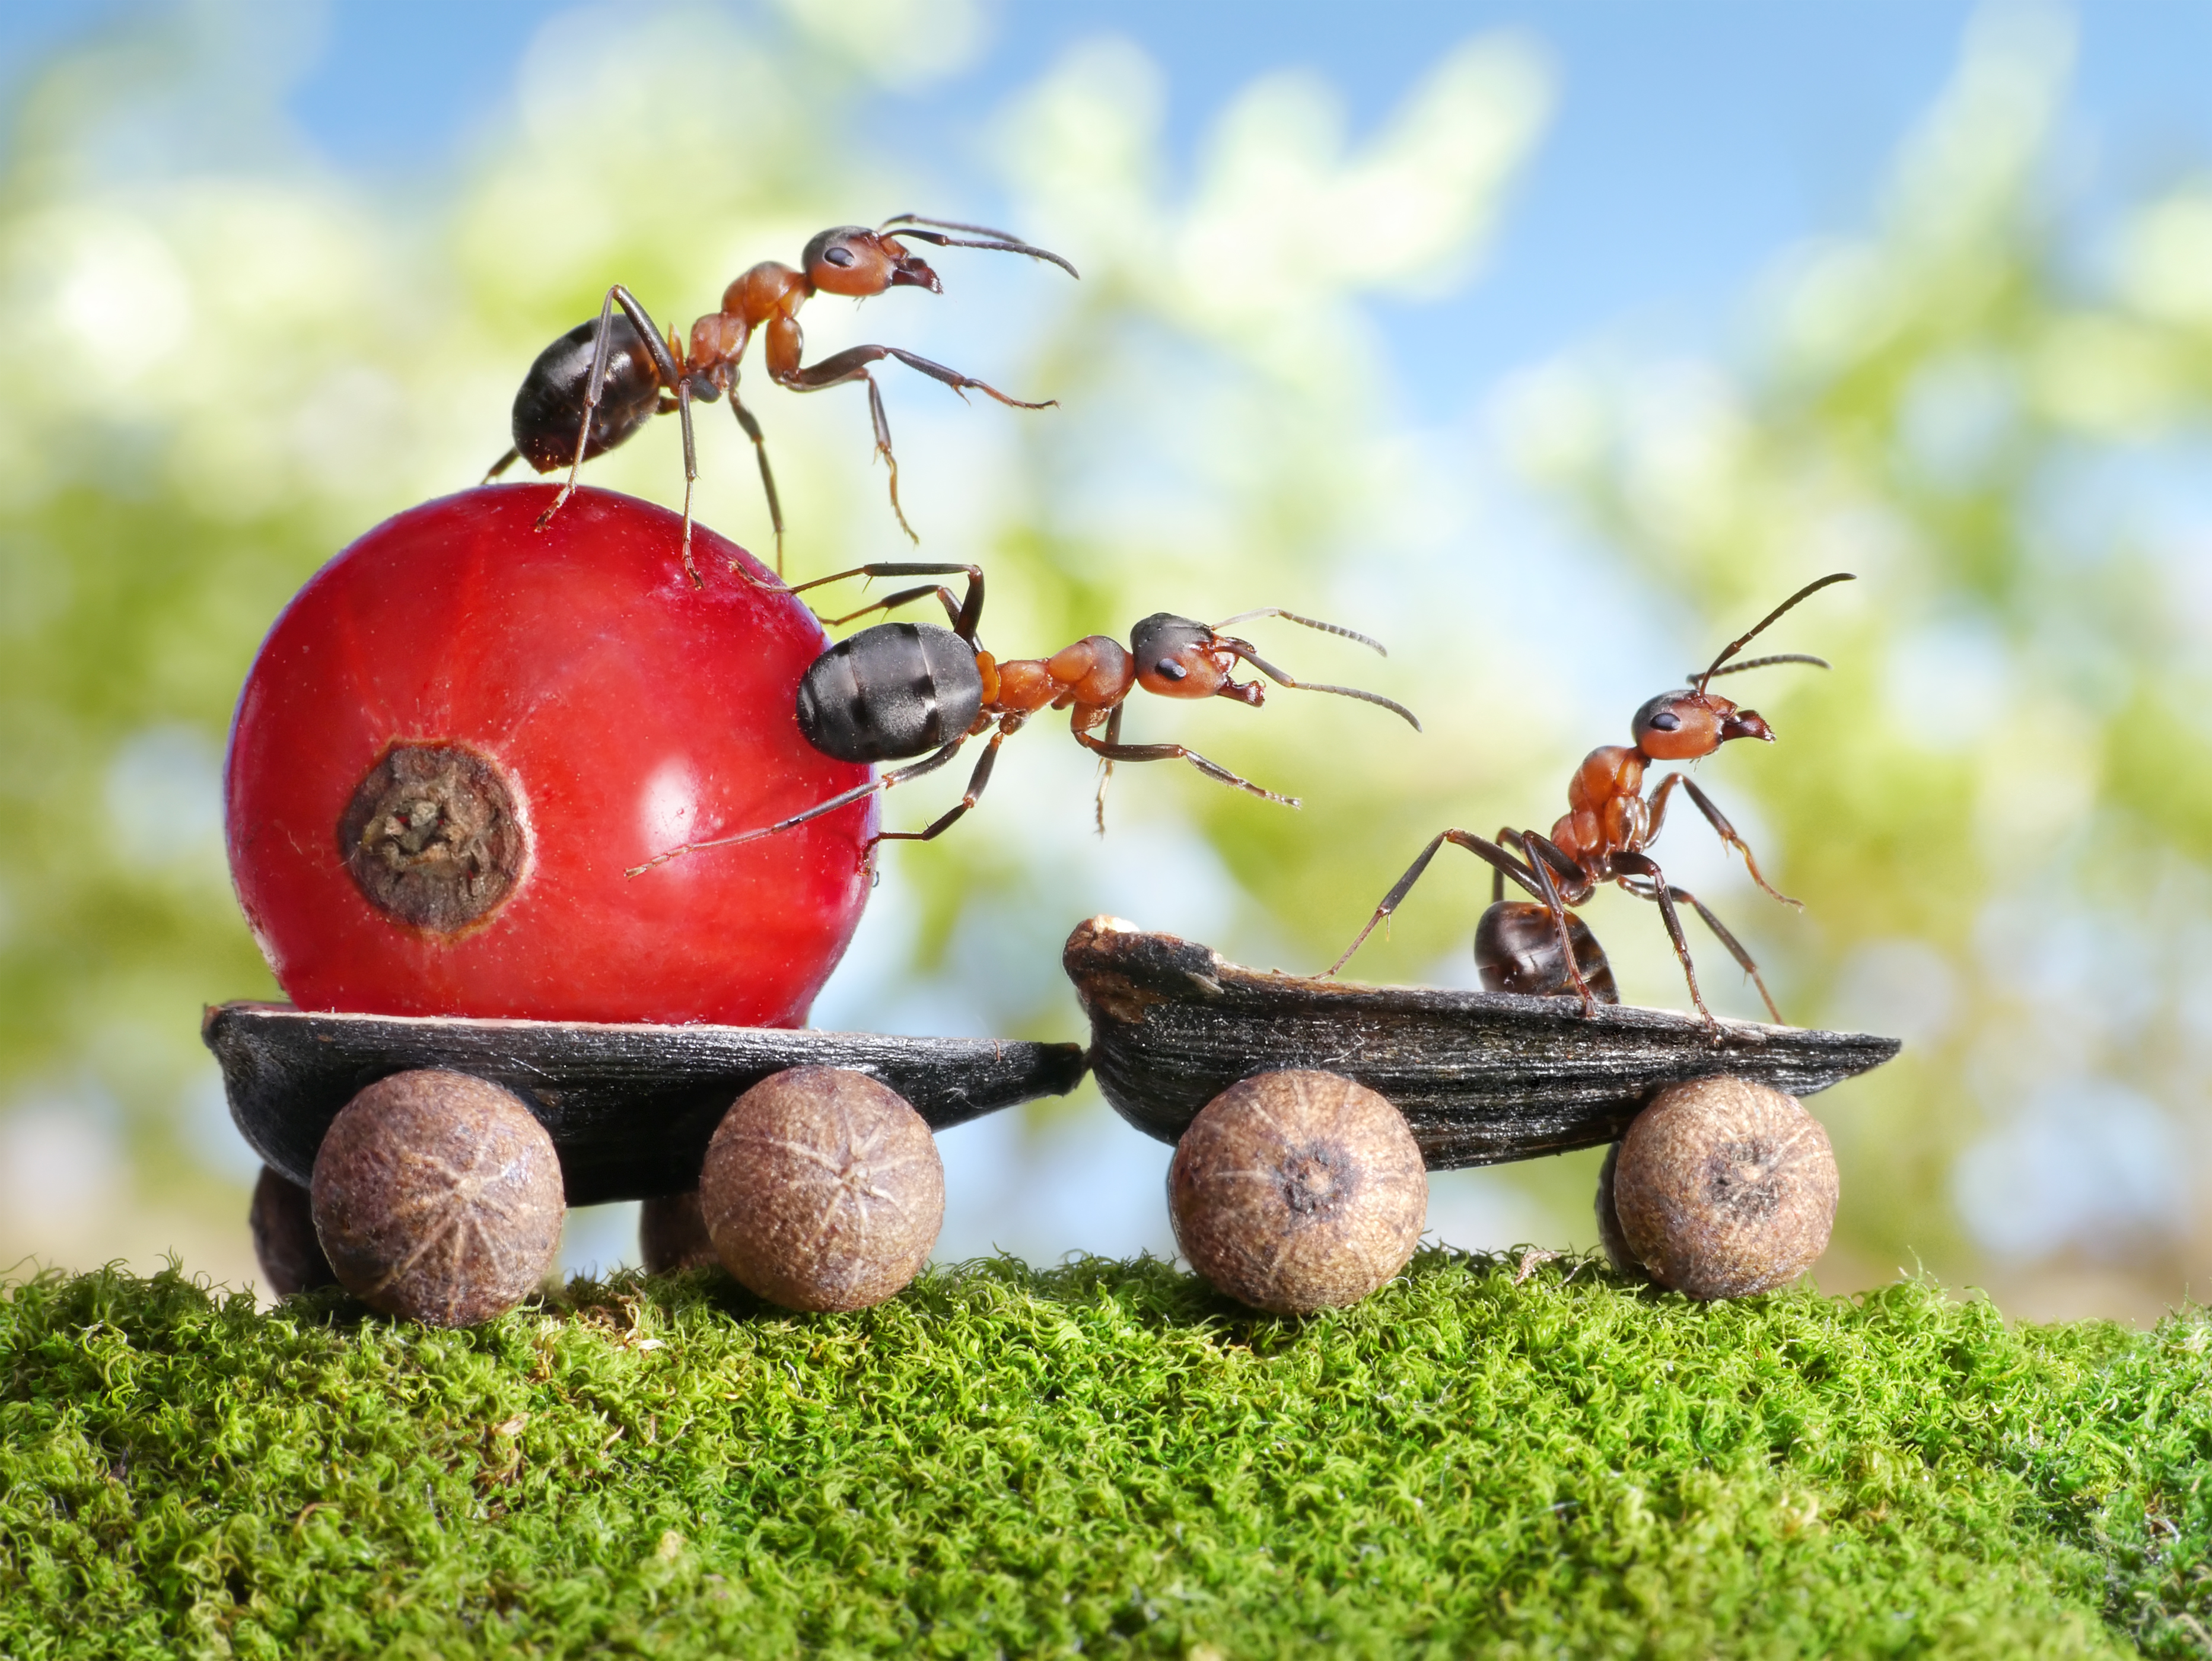 Картинки муравьев. Андрей Павлов фотограф муравьи. Муравей коммунист. Муравей трудяга. Трудолюбивый муравей.